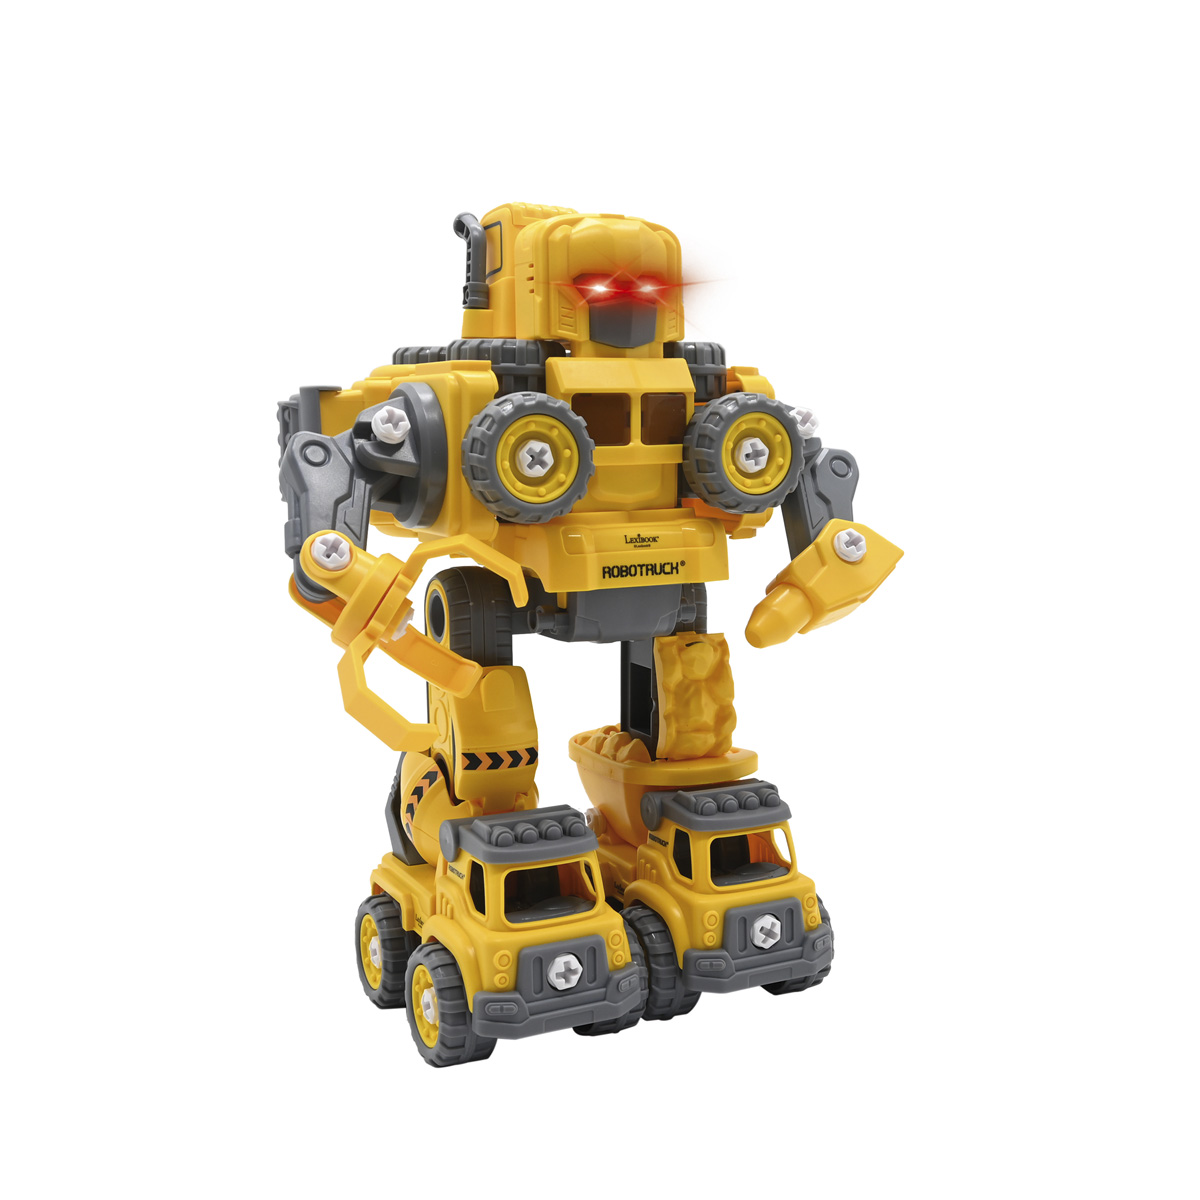 LEXIBOOK 5 Gelb/Grau bsw 1 Experimentierkasten, Roboter für Baufahrzeuge ROBOTRUCK - Roboter 5 1 in Bauset